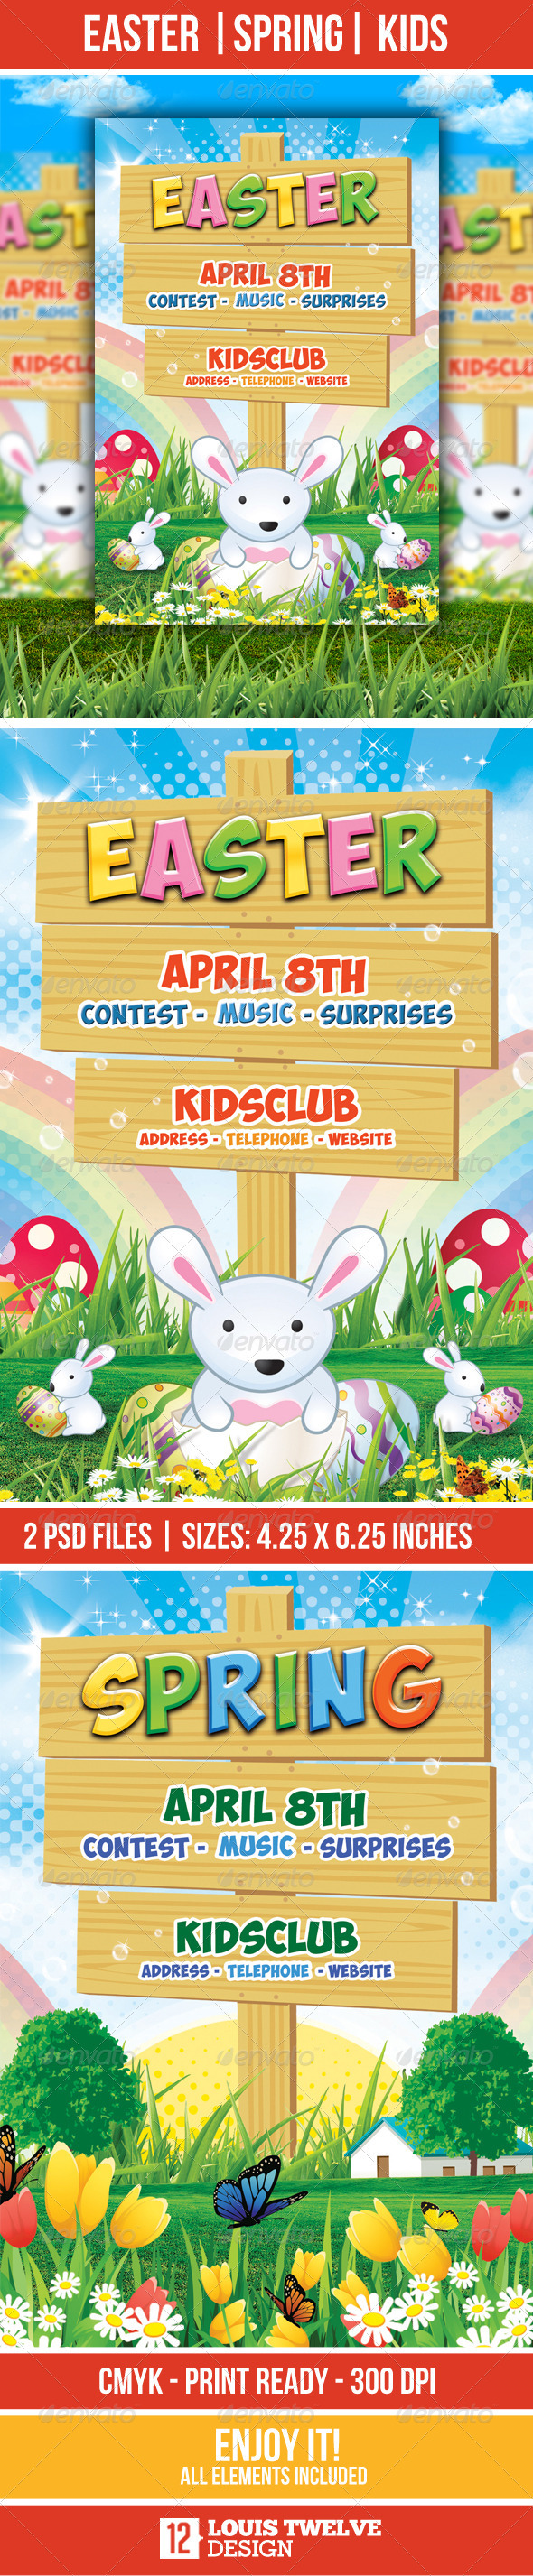 Easter Kids - Spring - Flyer Template